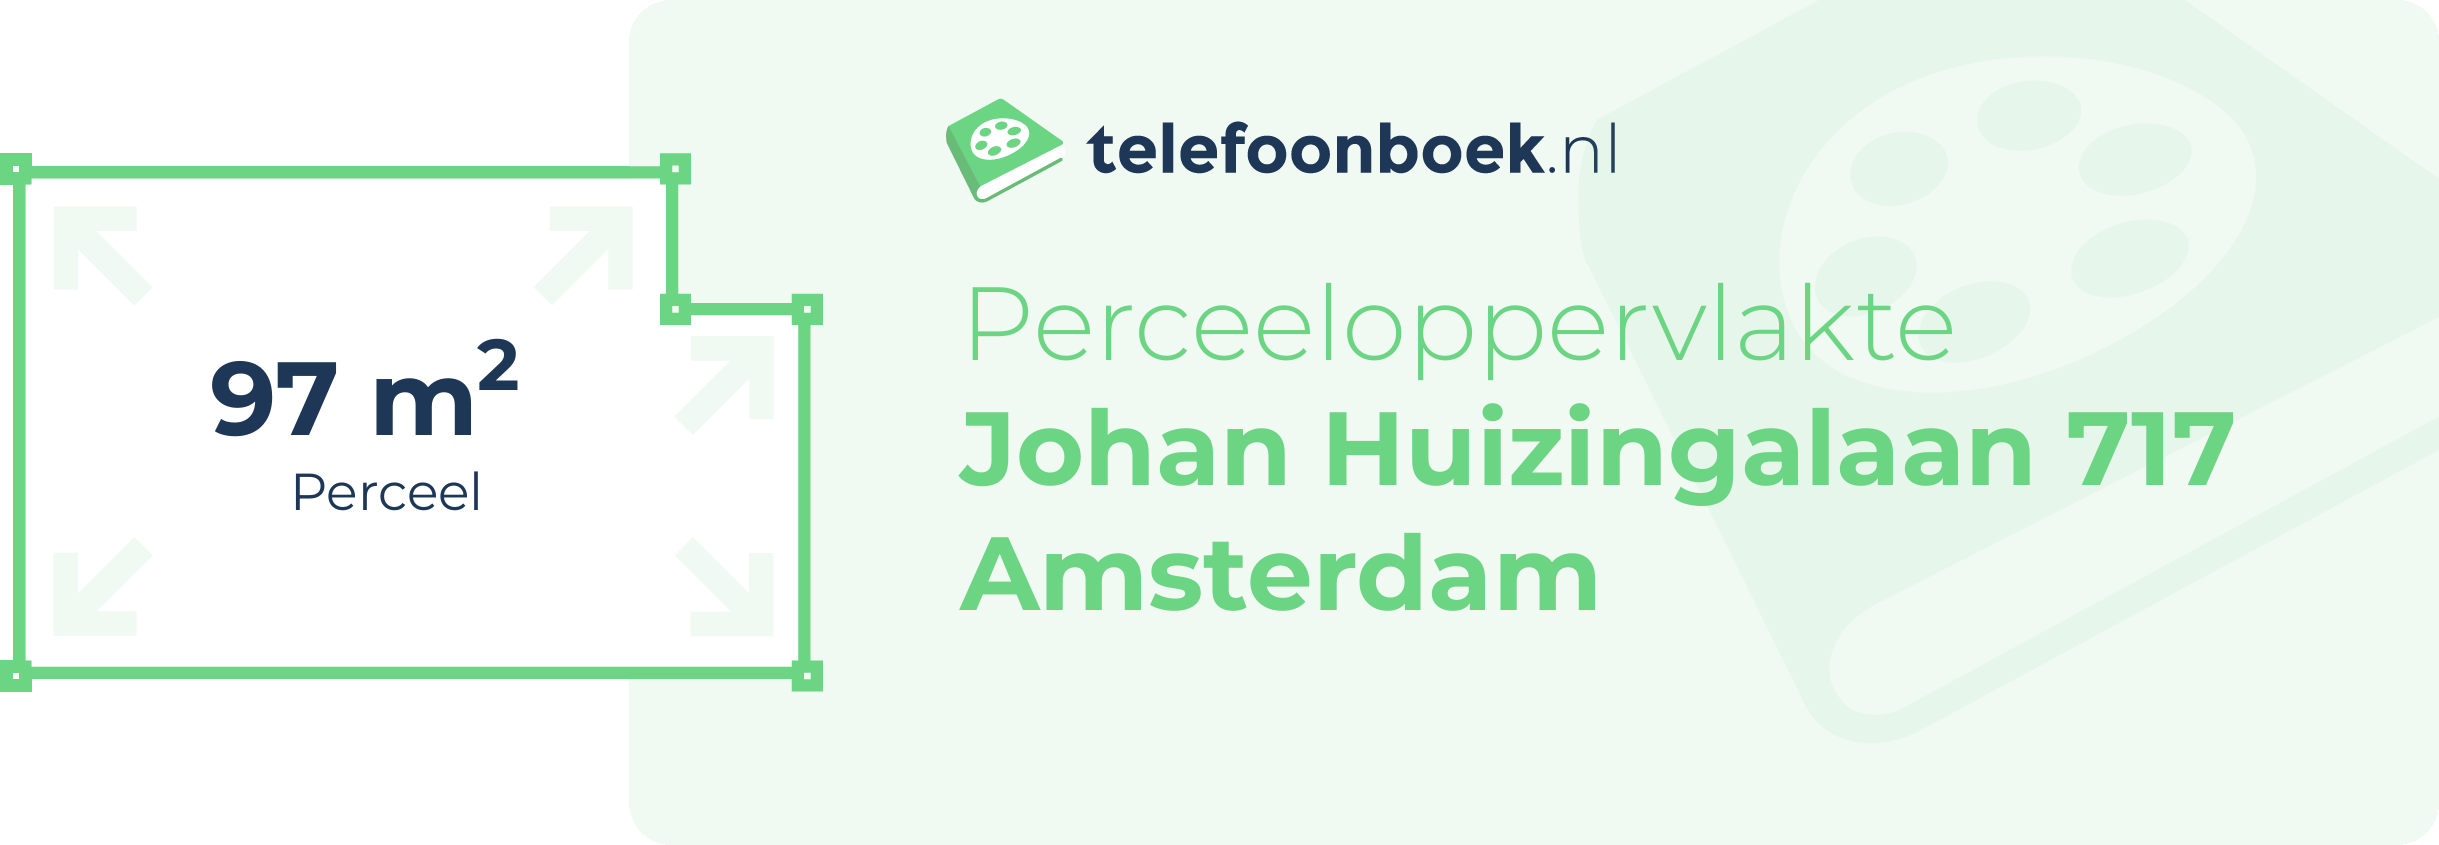 Perceeloppervlakte Johan Huizingalaan 717 Amsterdam